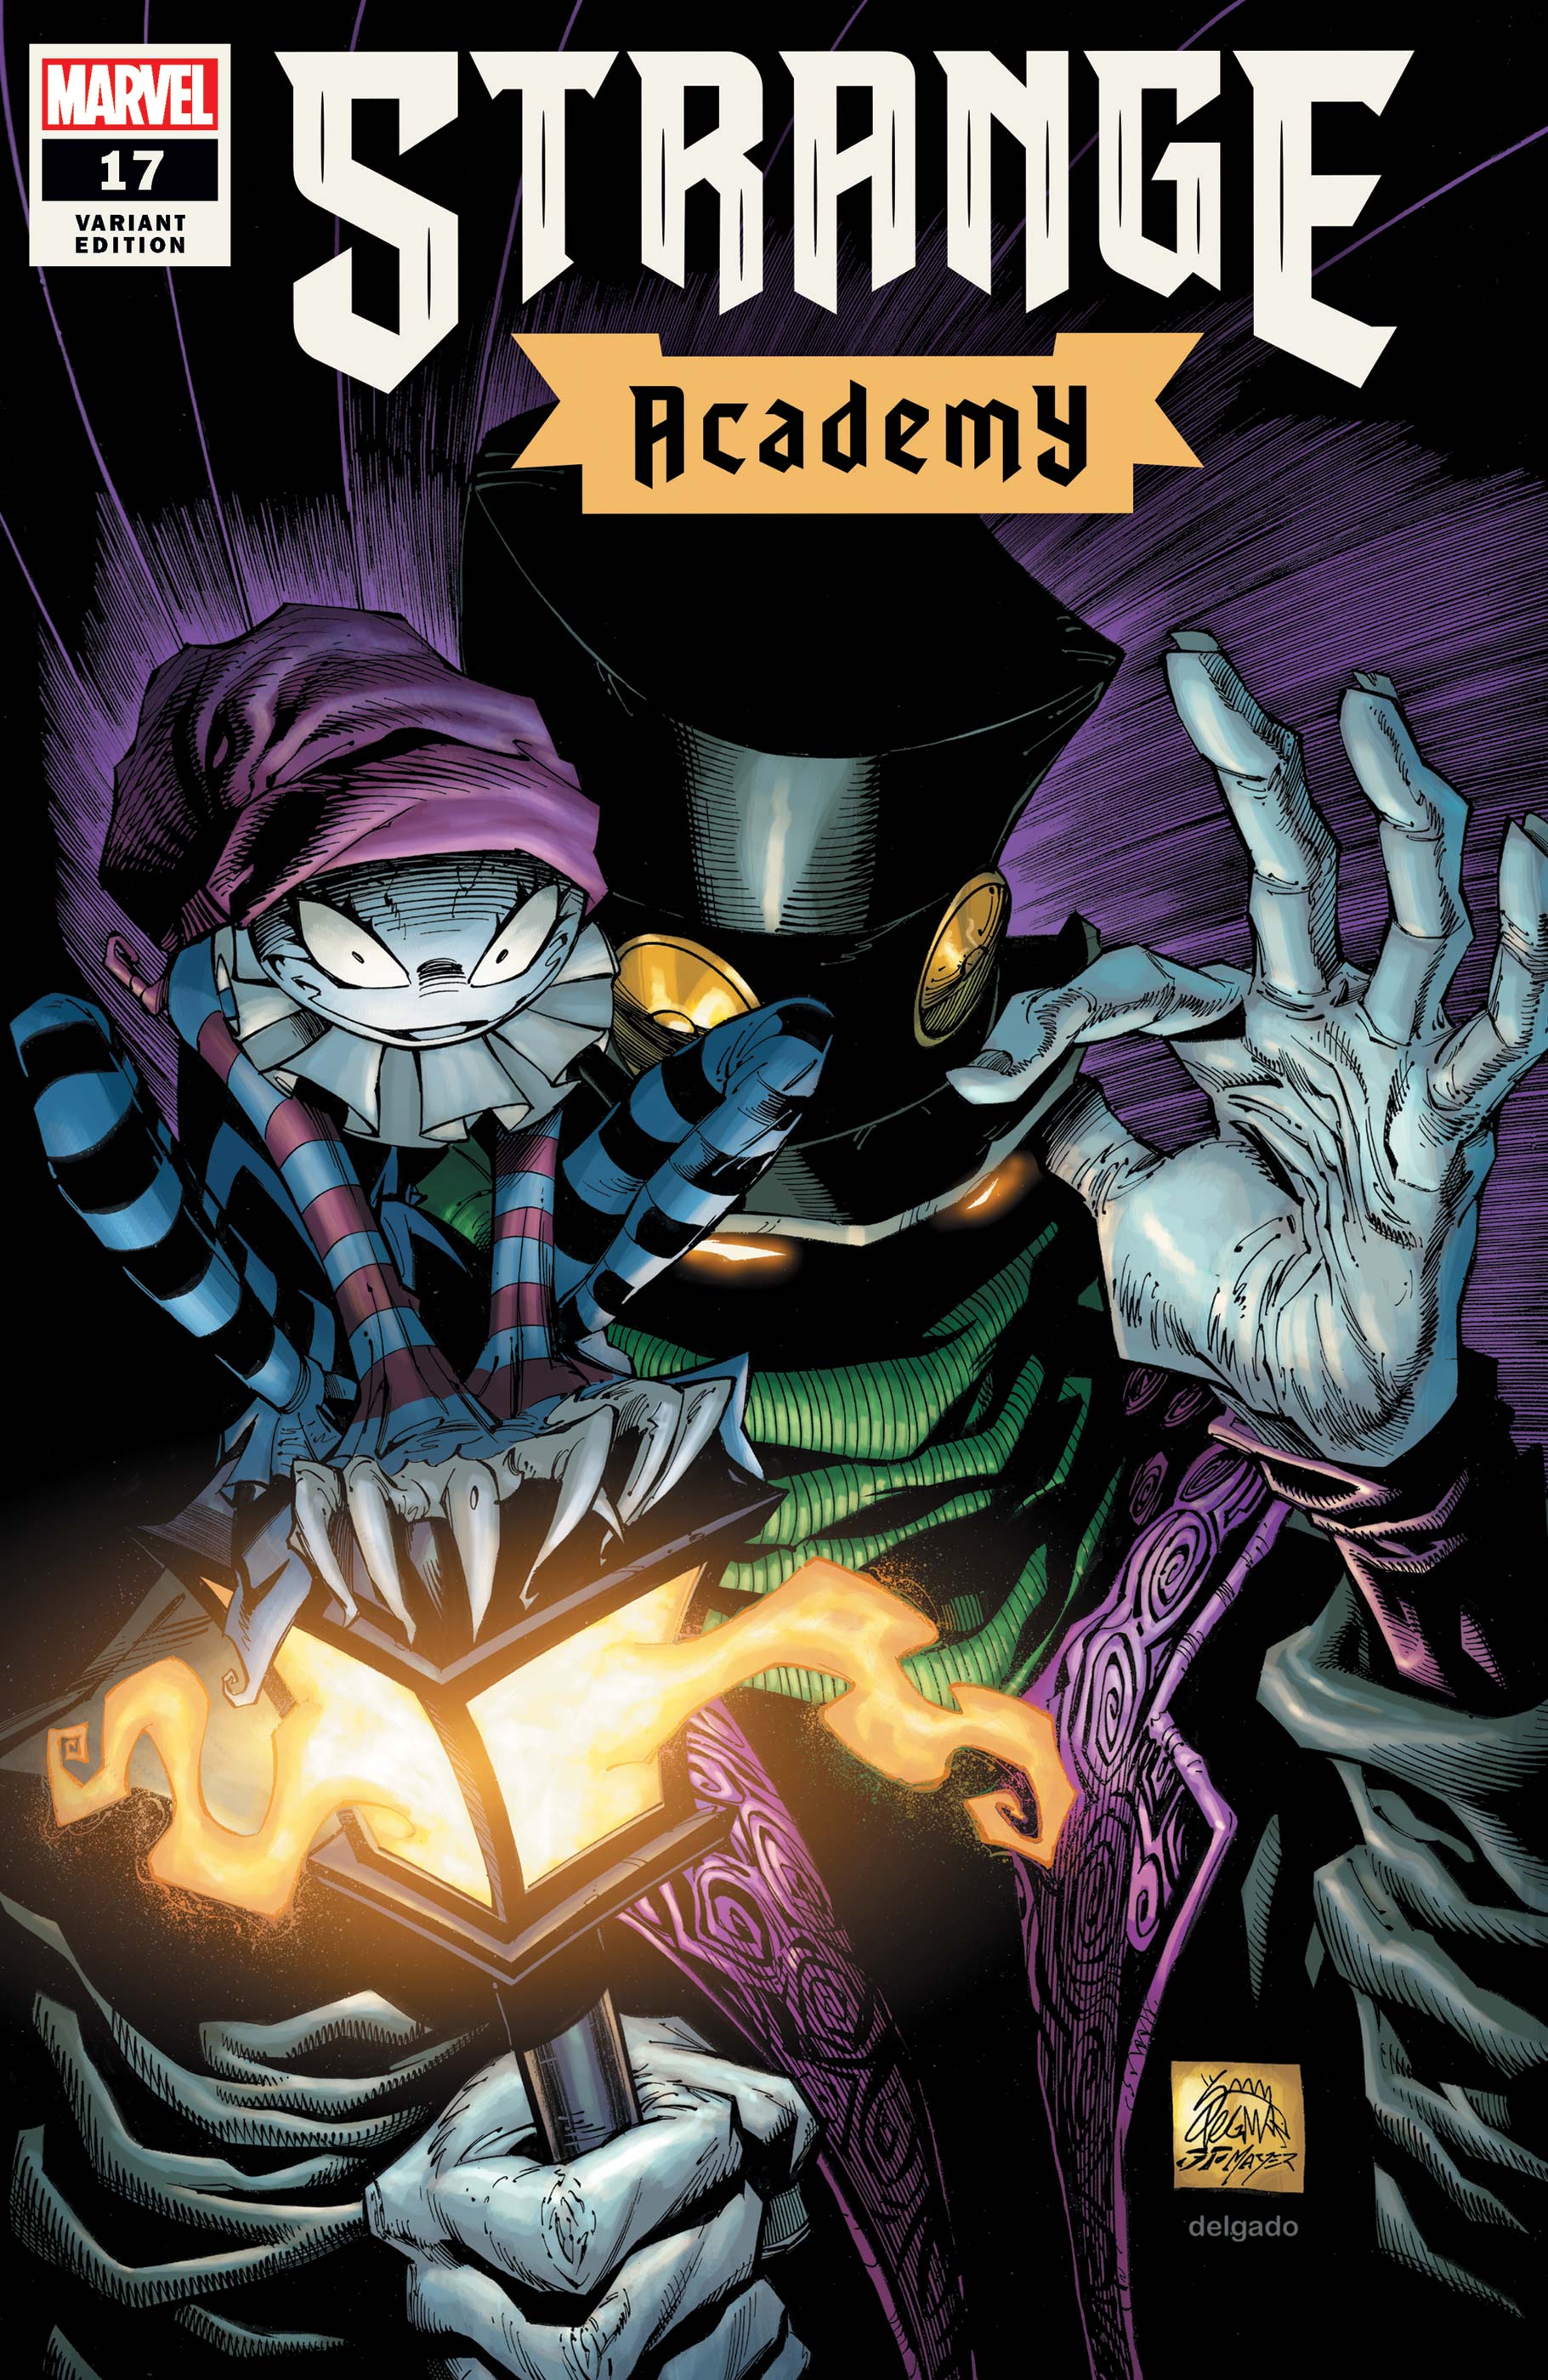 Strange Academy (2020) #17 (Variant)